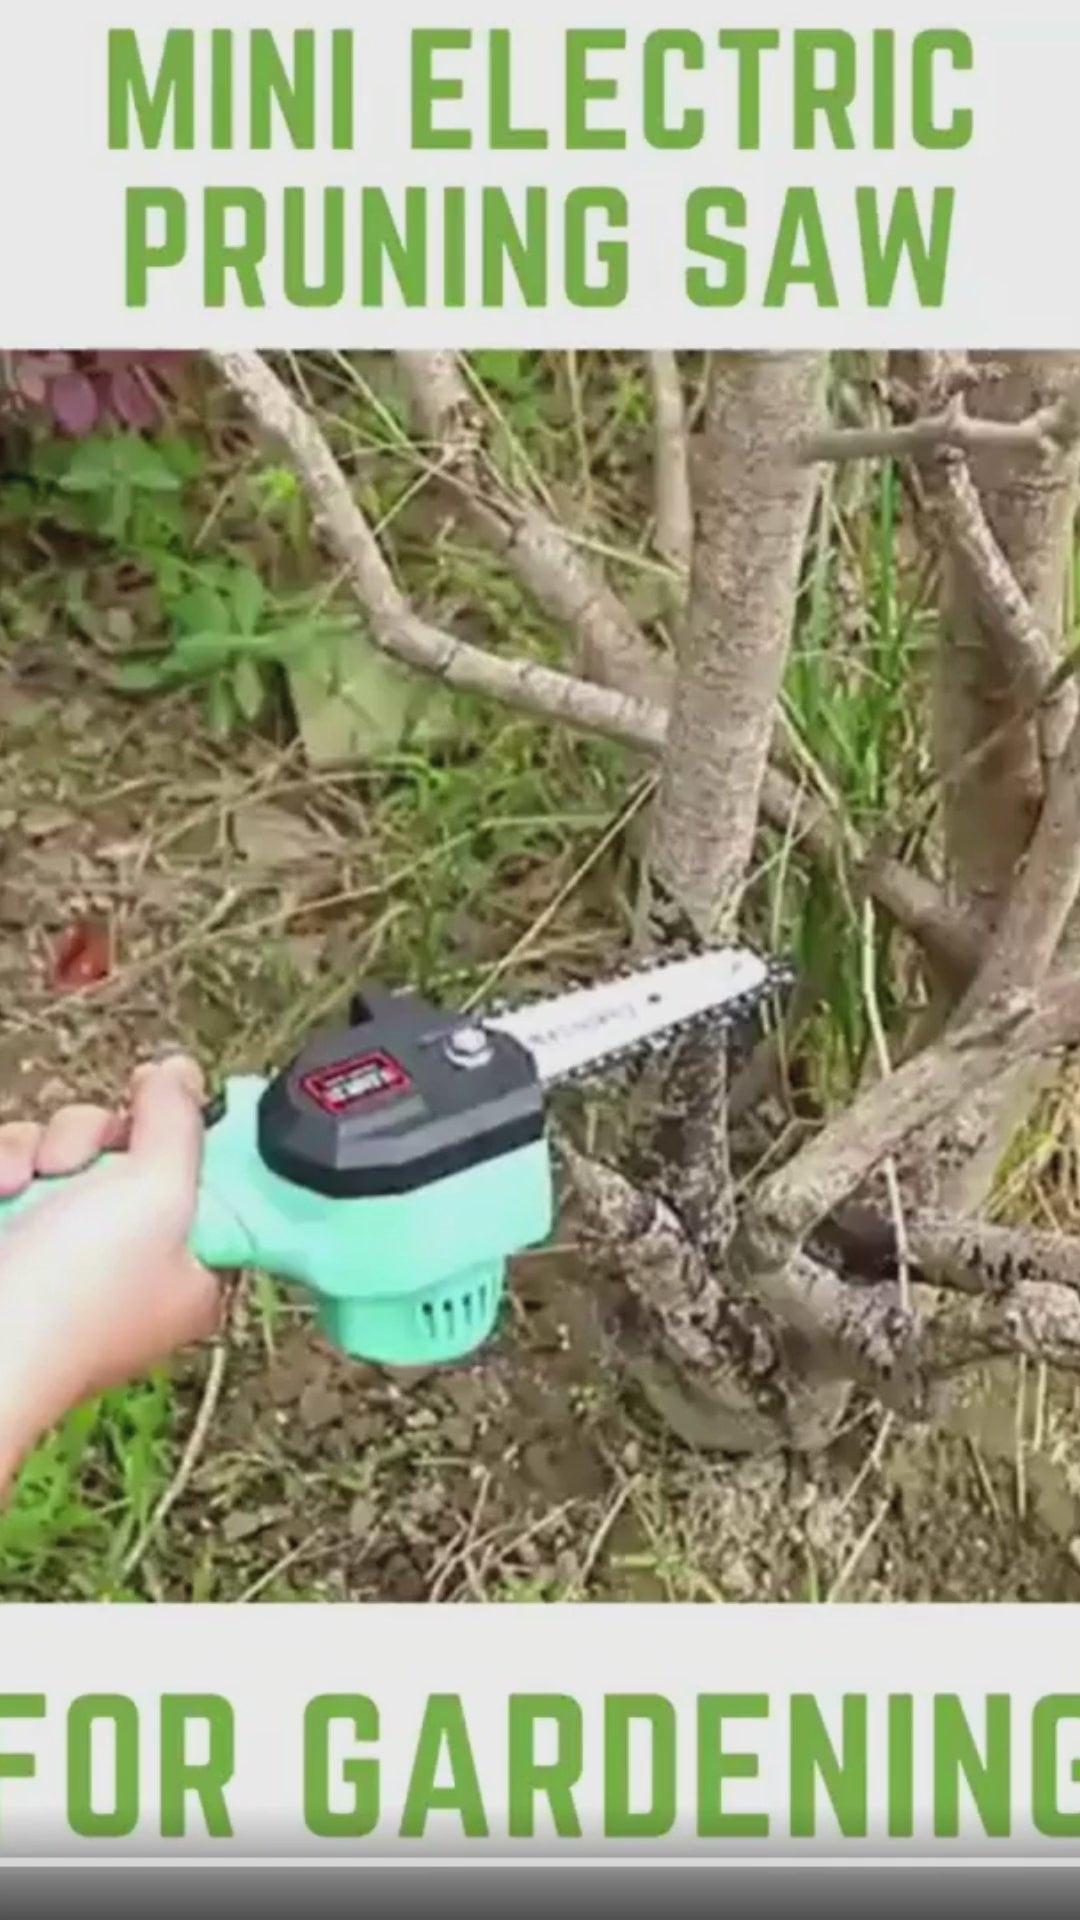 24V Mini Electric Pruning Saw, Small Electric Pruning Saw